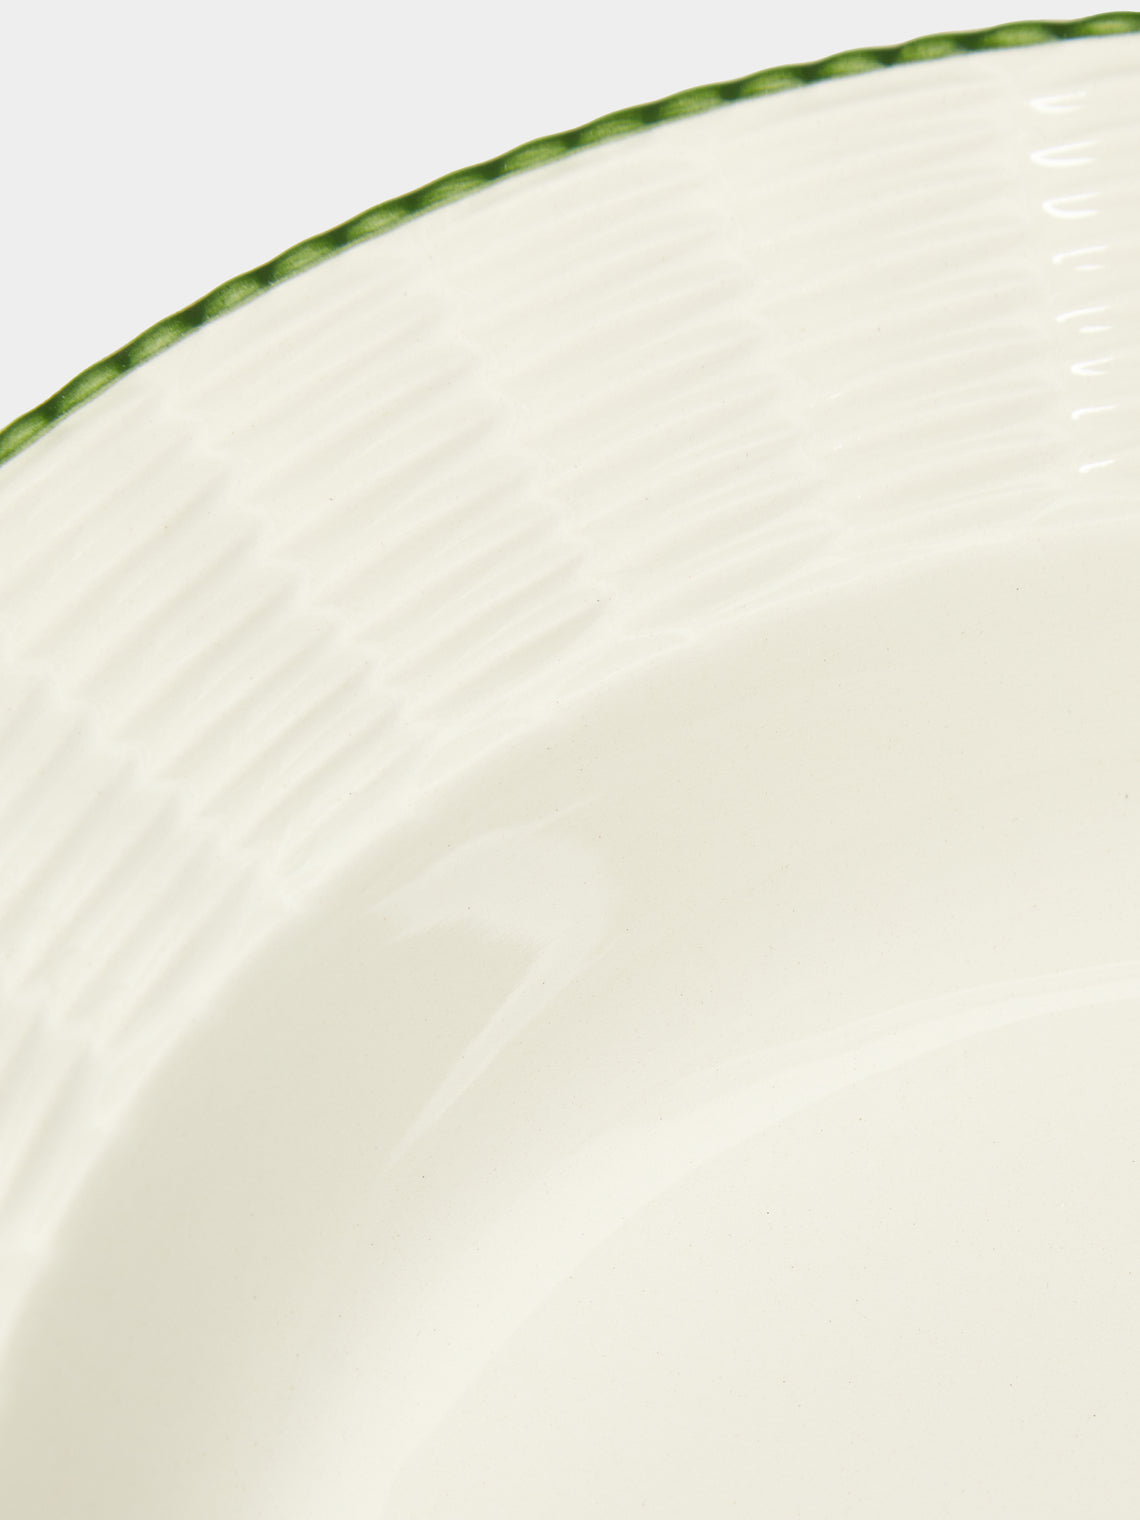 Este Ceramiche - Wicker Hand-Painted Ceramic Soup Plates (Set of 4) -  - ABASK